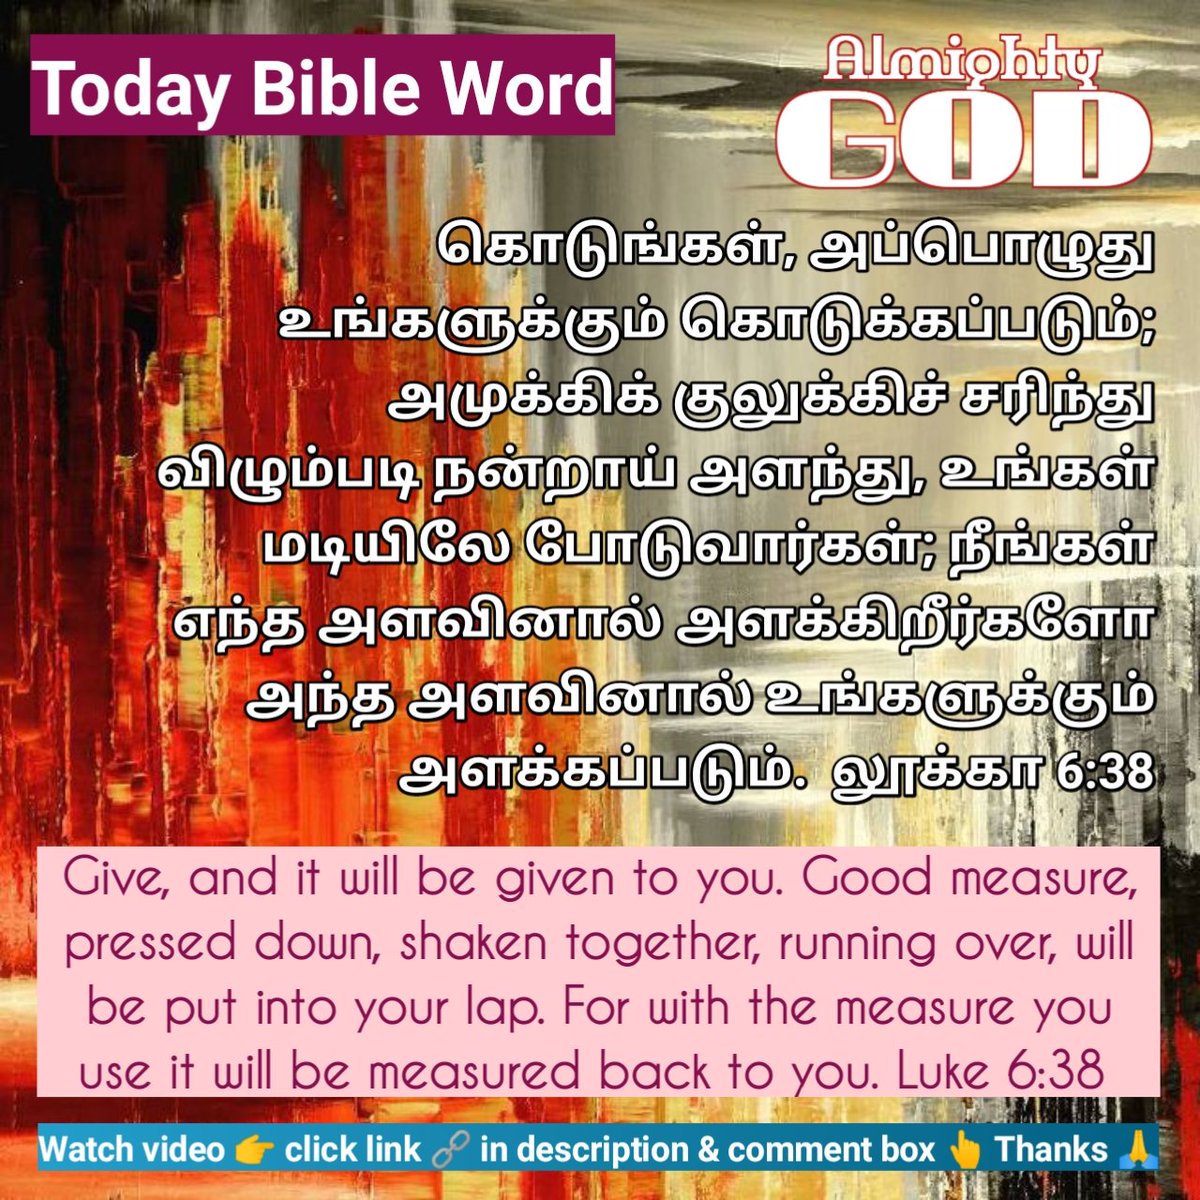 youtube.com/shorts/j5NtOFQ…
#devotional #Motivation #Bible #biblewords